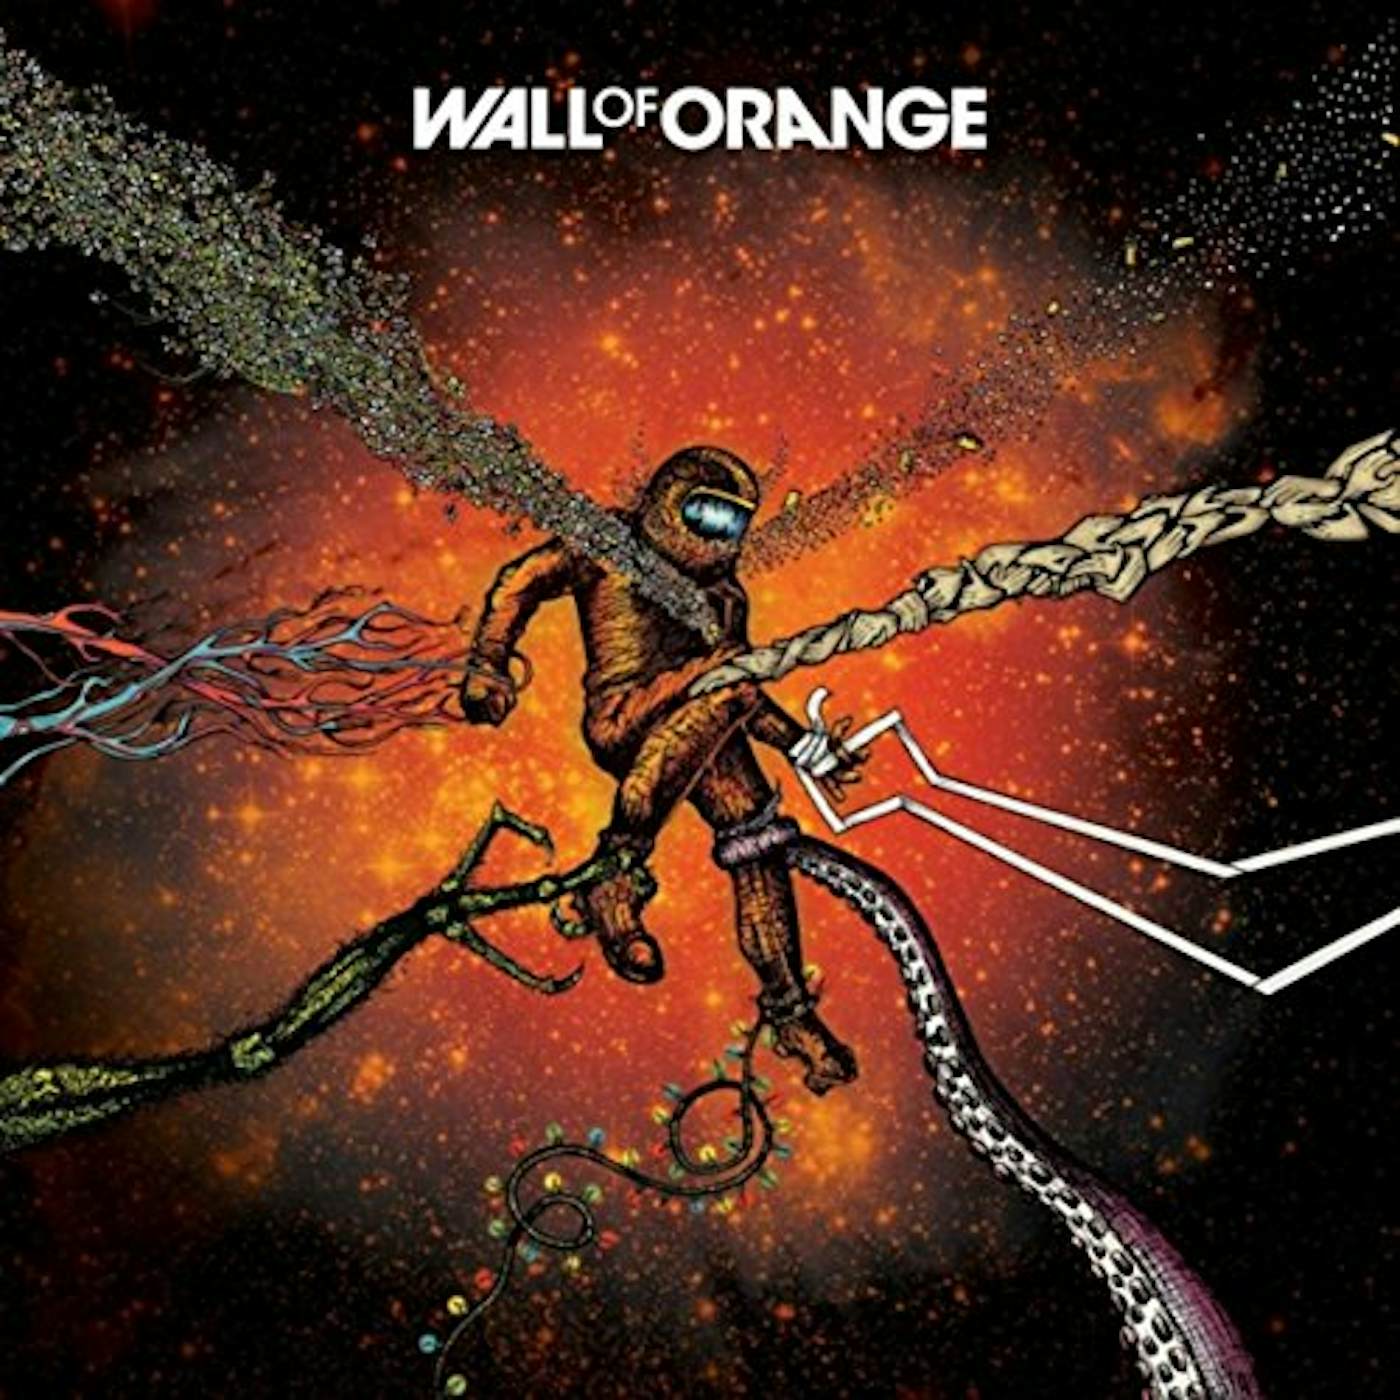 WALL OF ORANGE CD